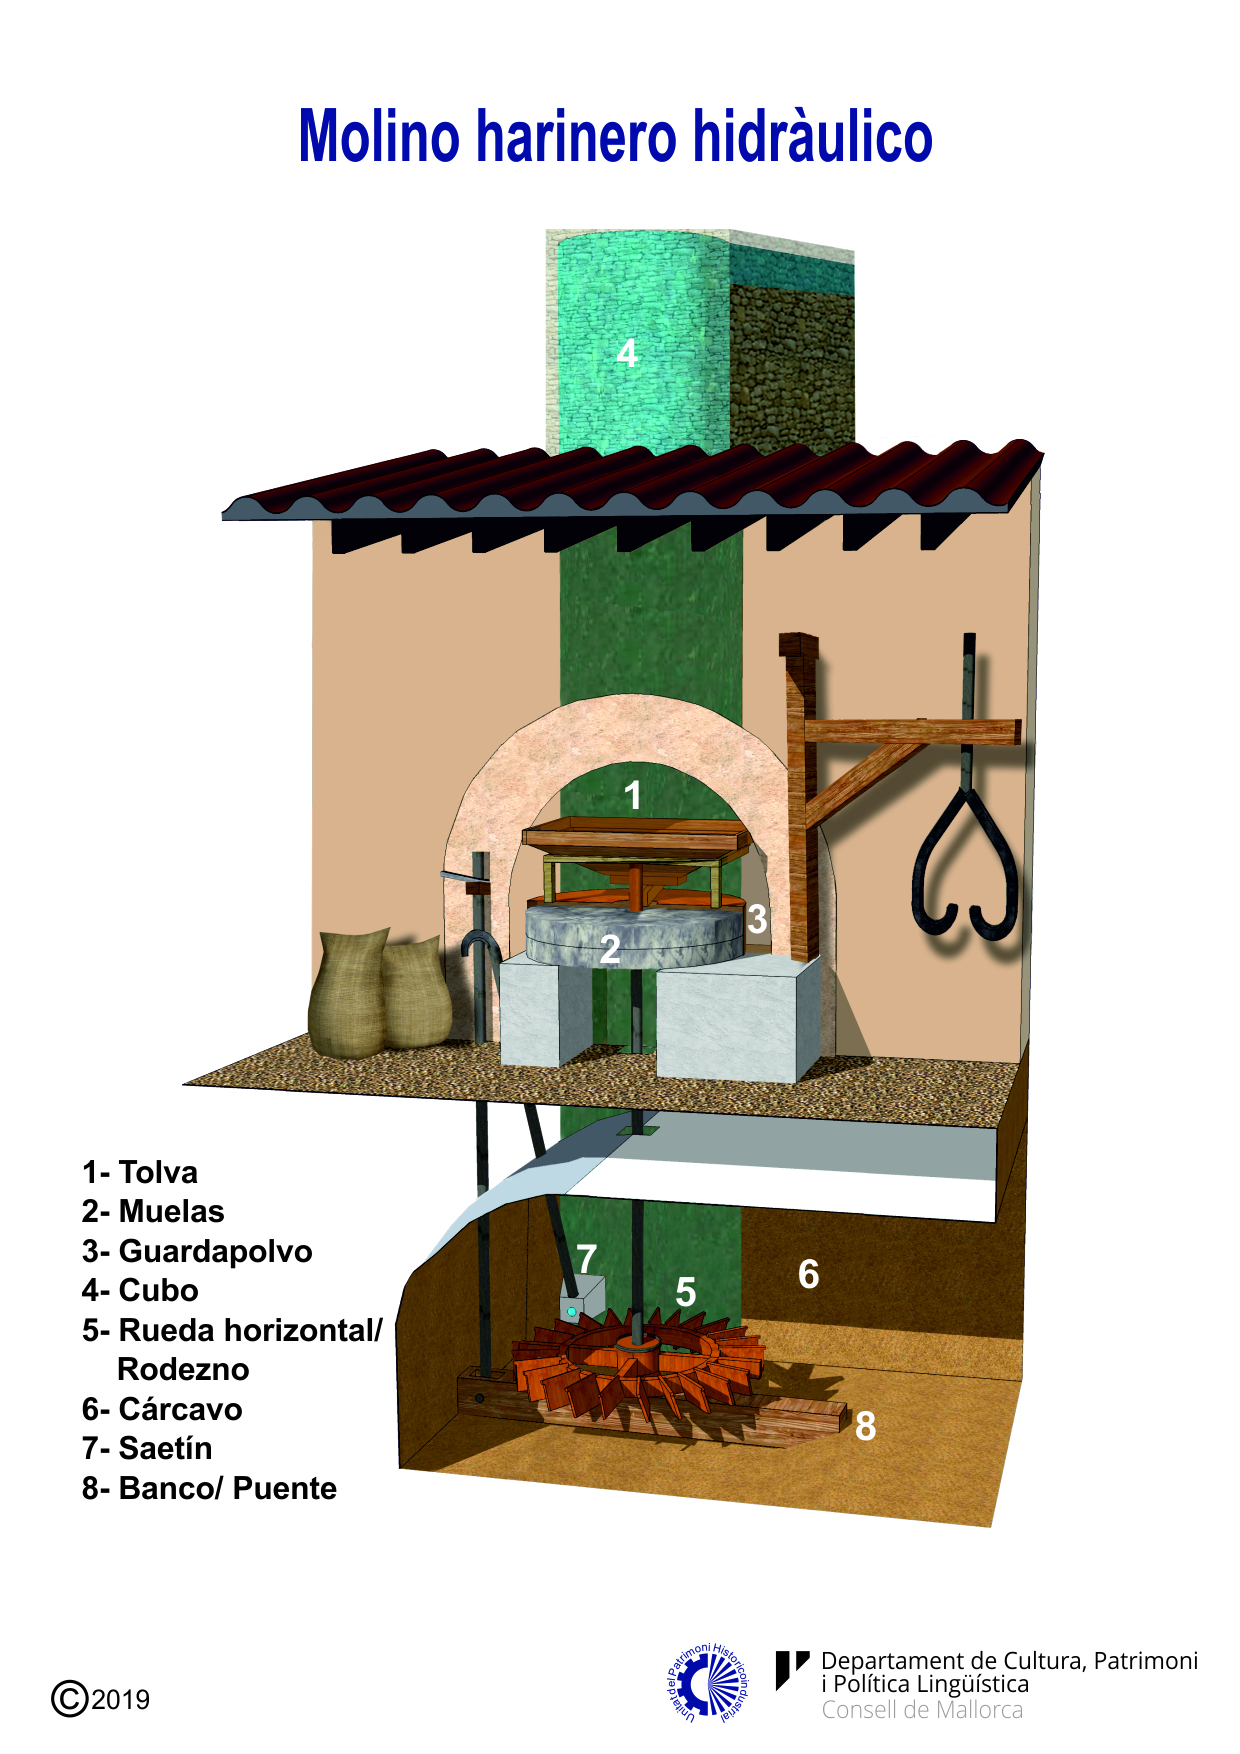 Maquinaria del molino hidráulico de Lluc del siglo XIV